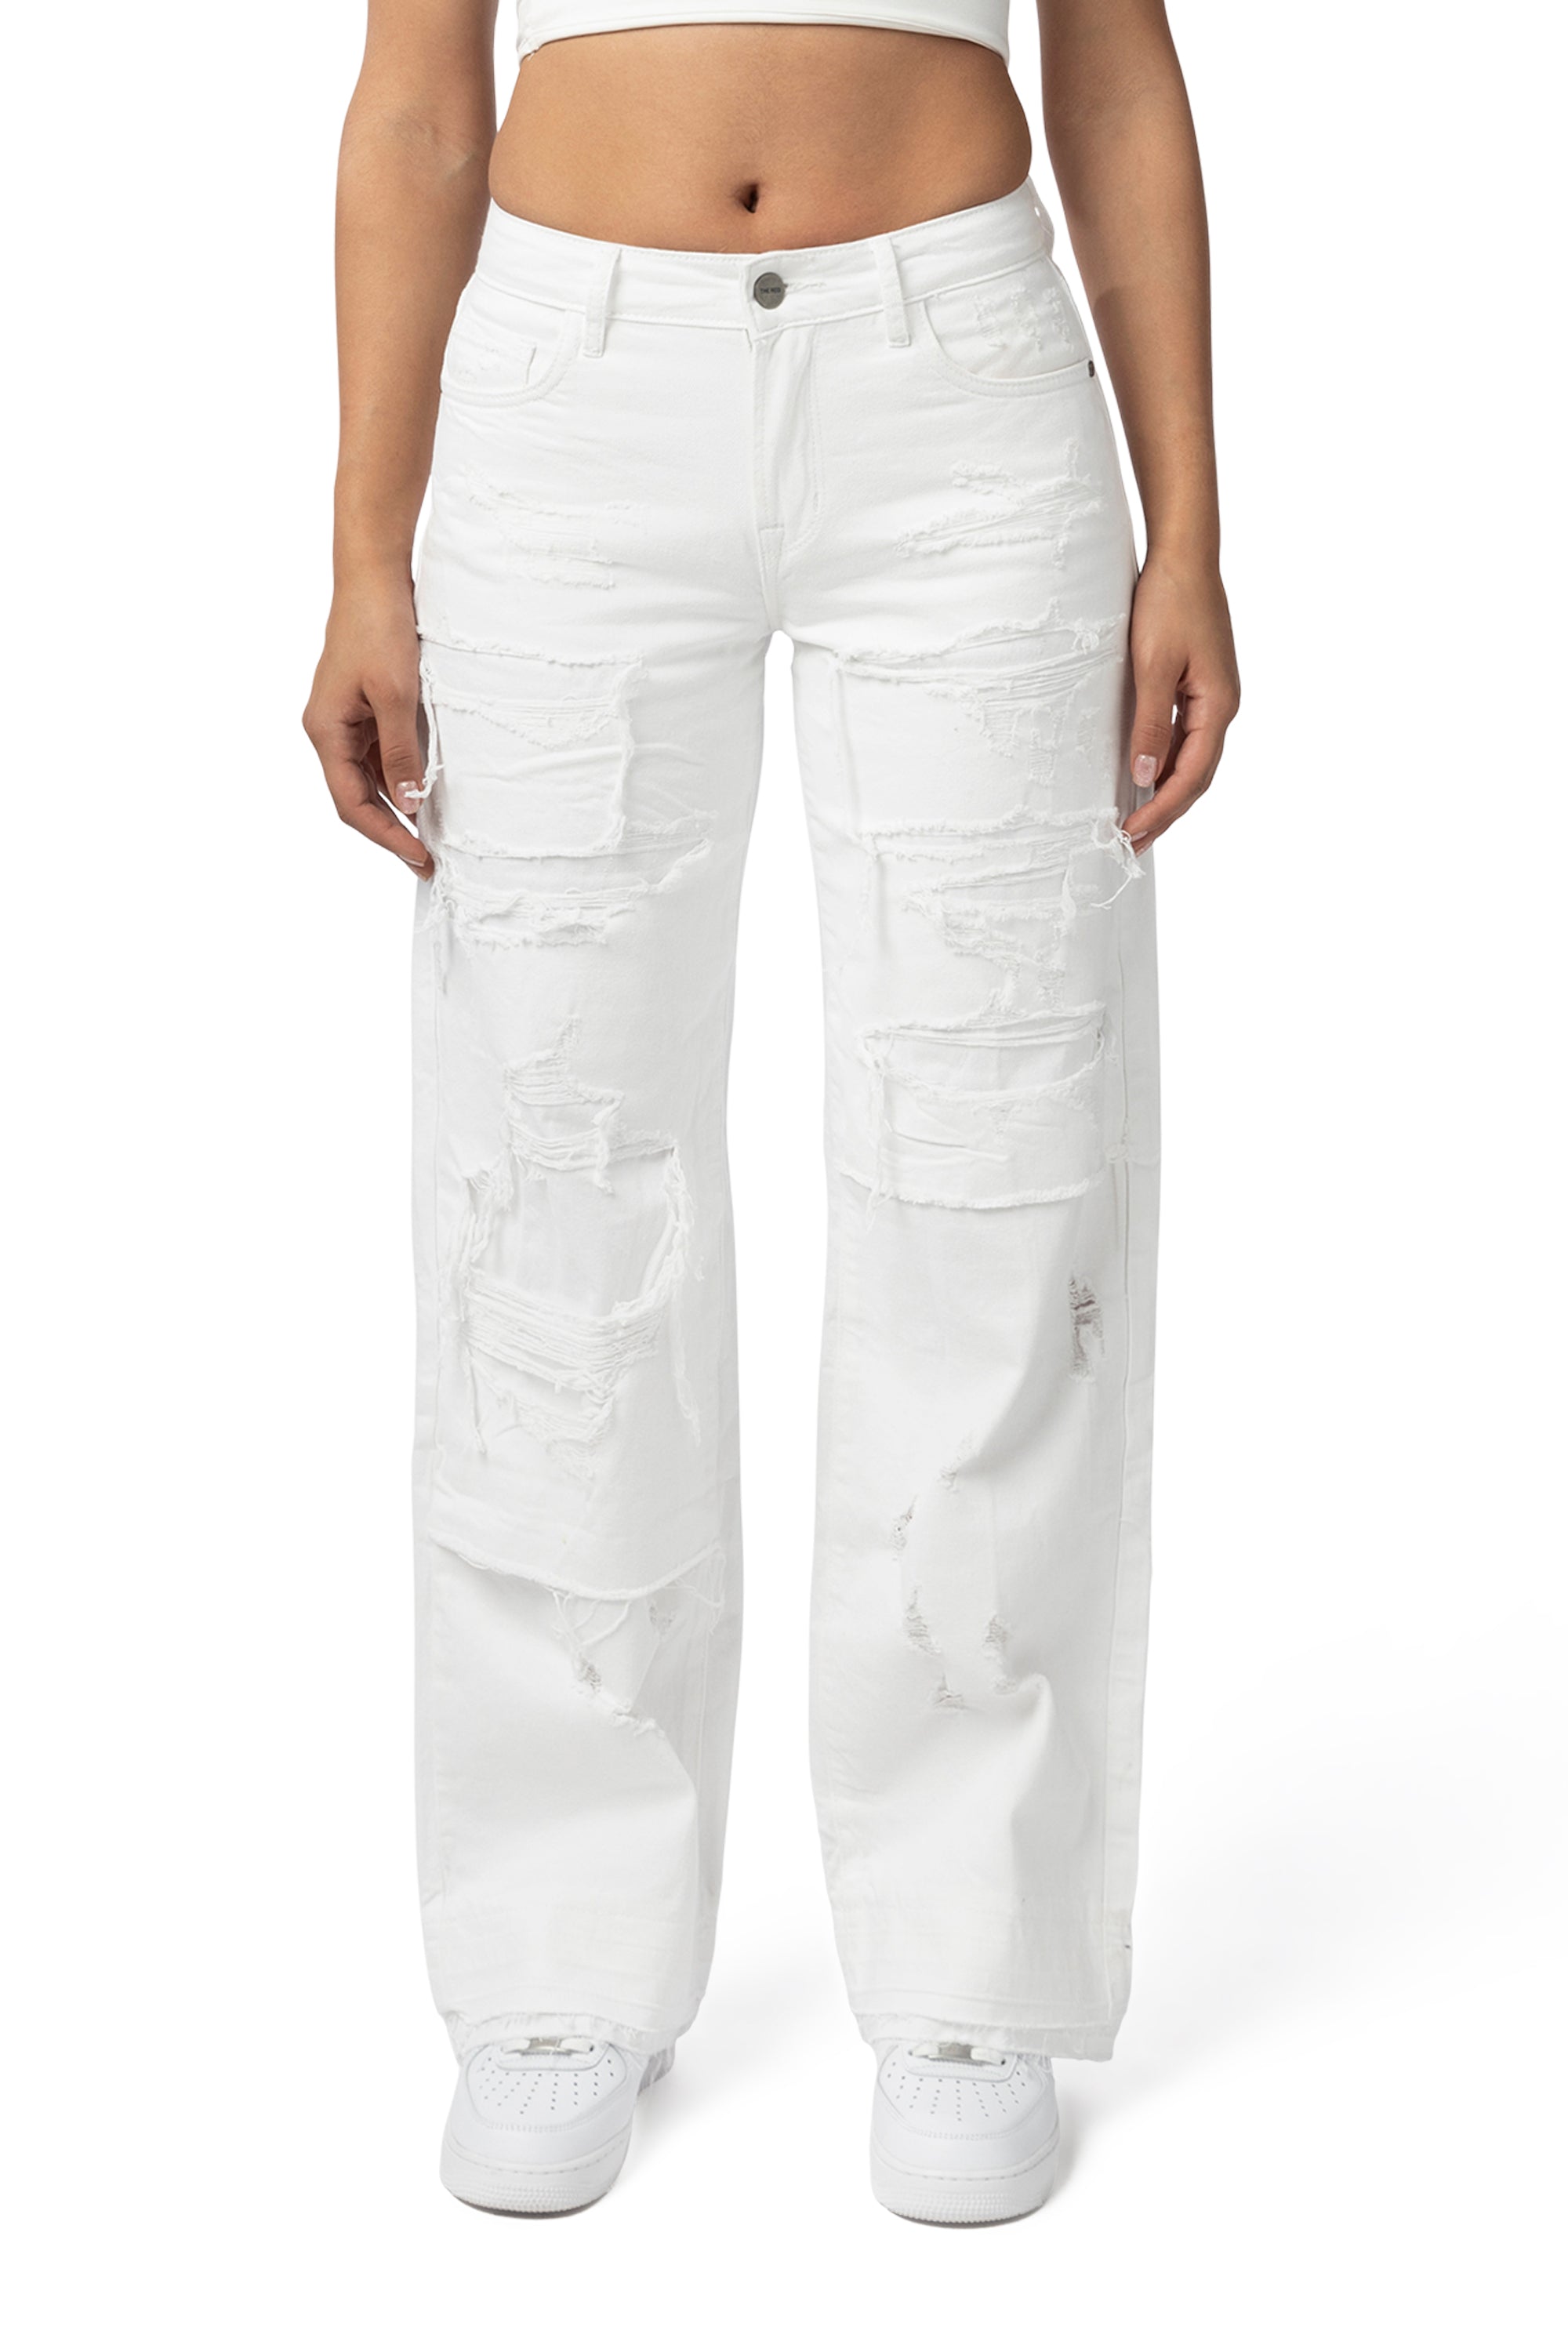 Khloe Kardashian's brand Good American silver jeans... - Depop